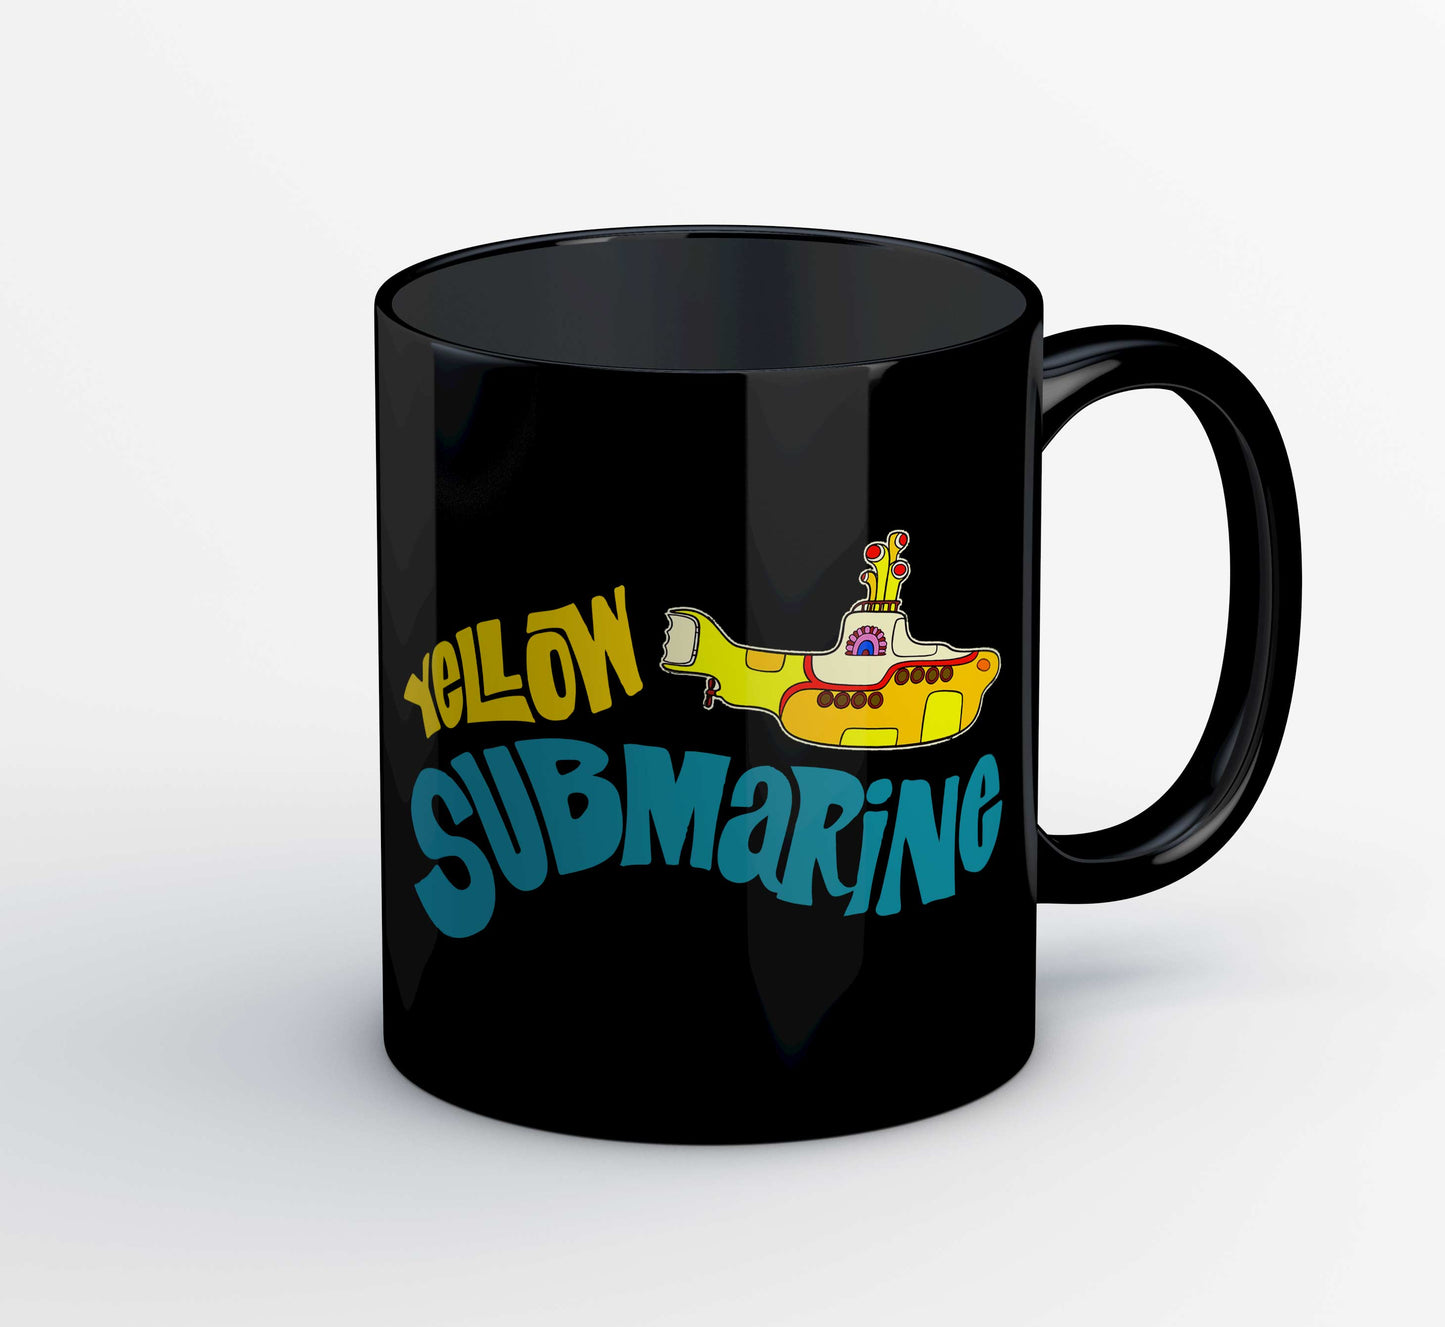 The Beatles Mug - Yellow Submarine Mugs The Banyan Tee TBT Coffee Tea Designer Ceramic Milk Unique under Rs